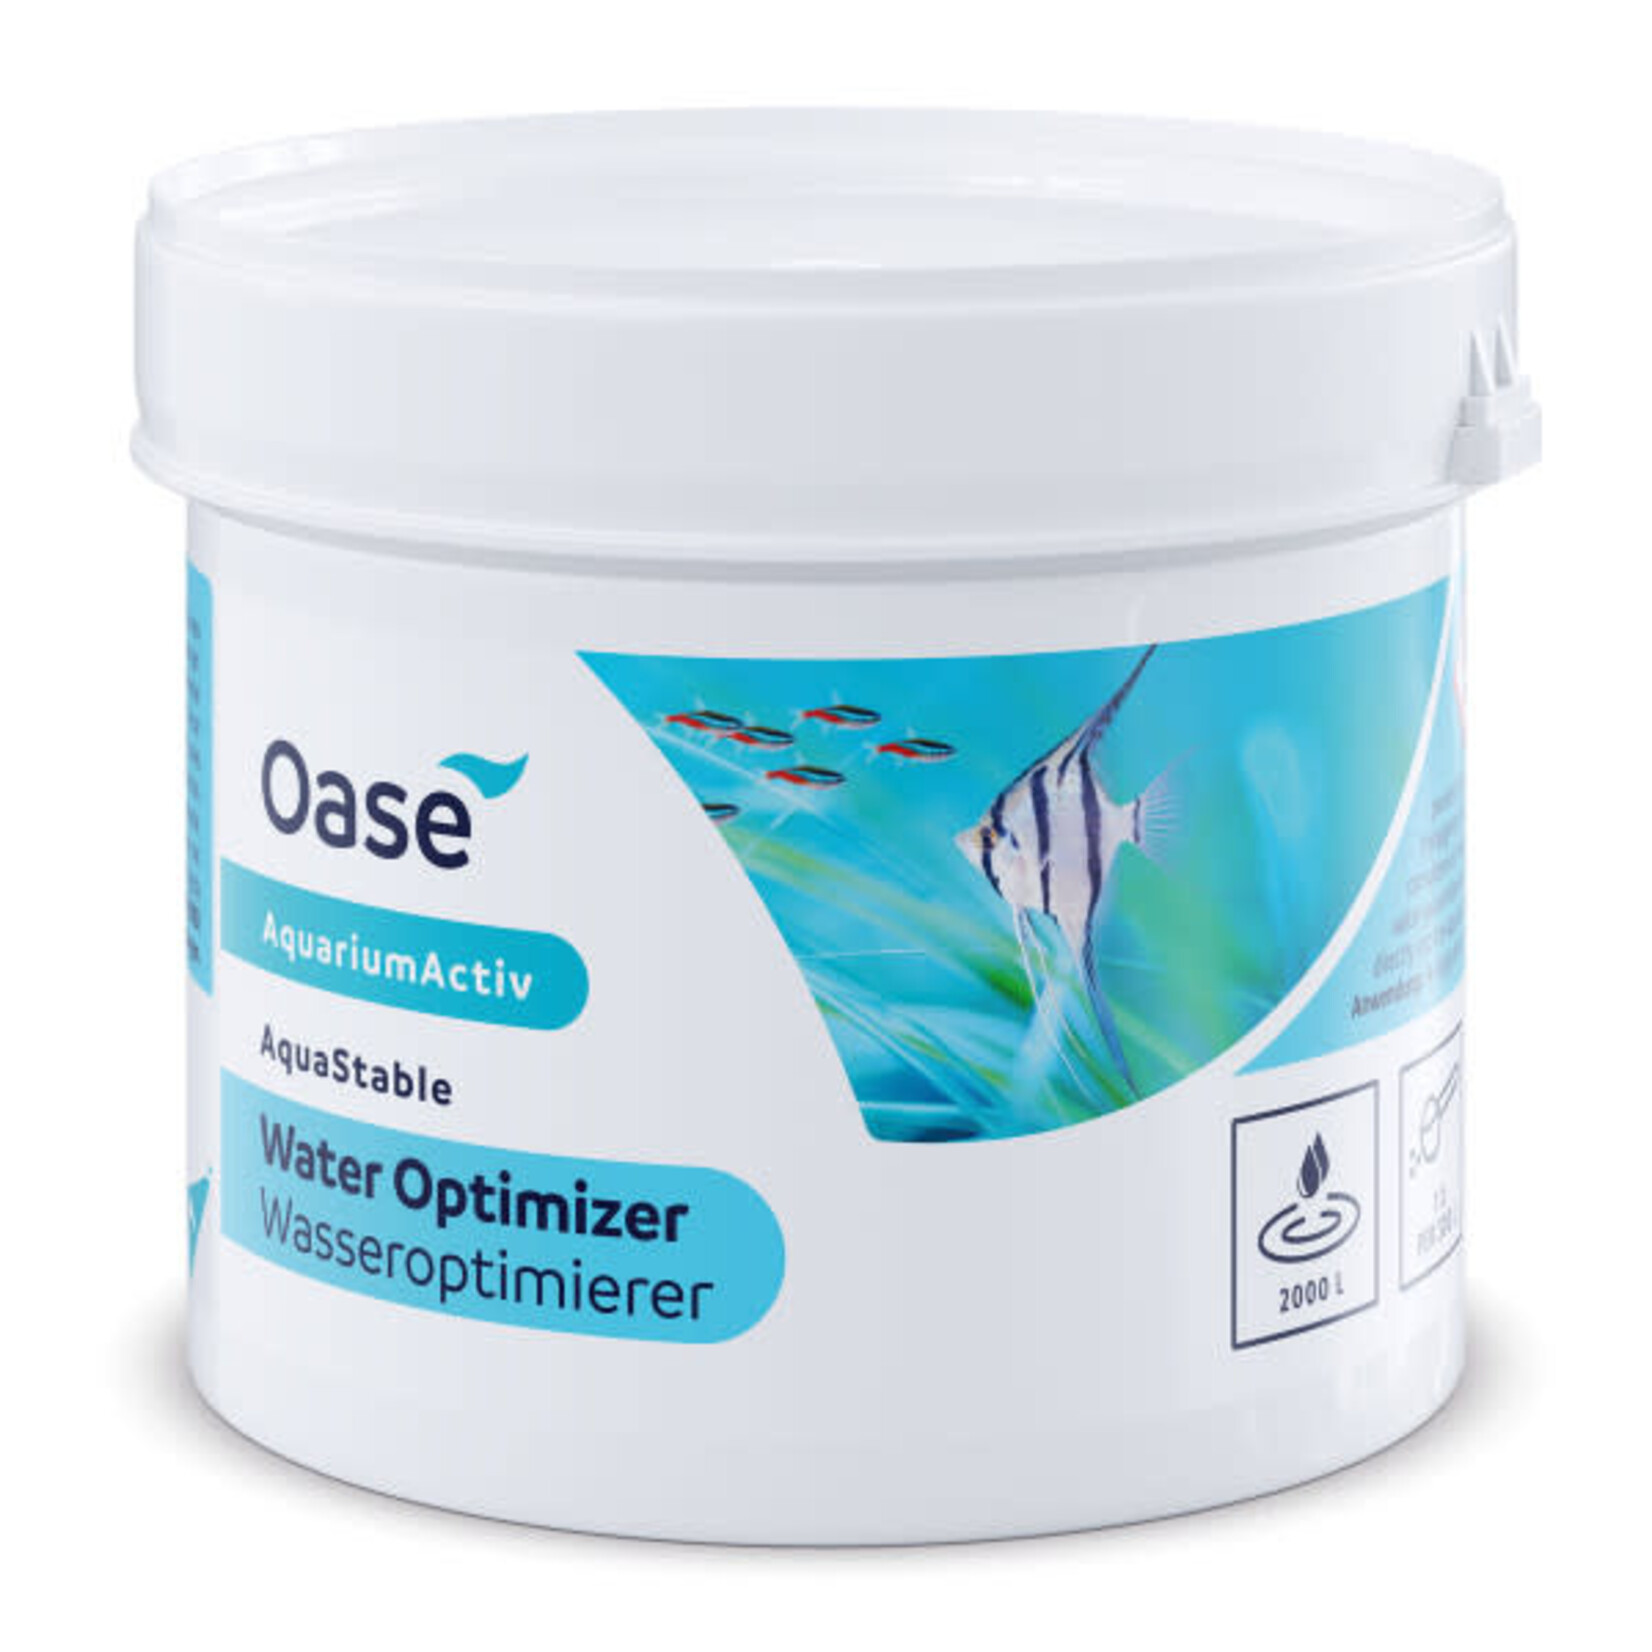 Oase AquaStable Wateroptimaliseerder 100 g